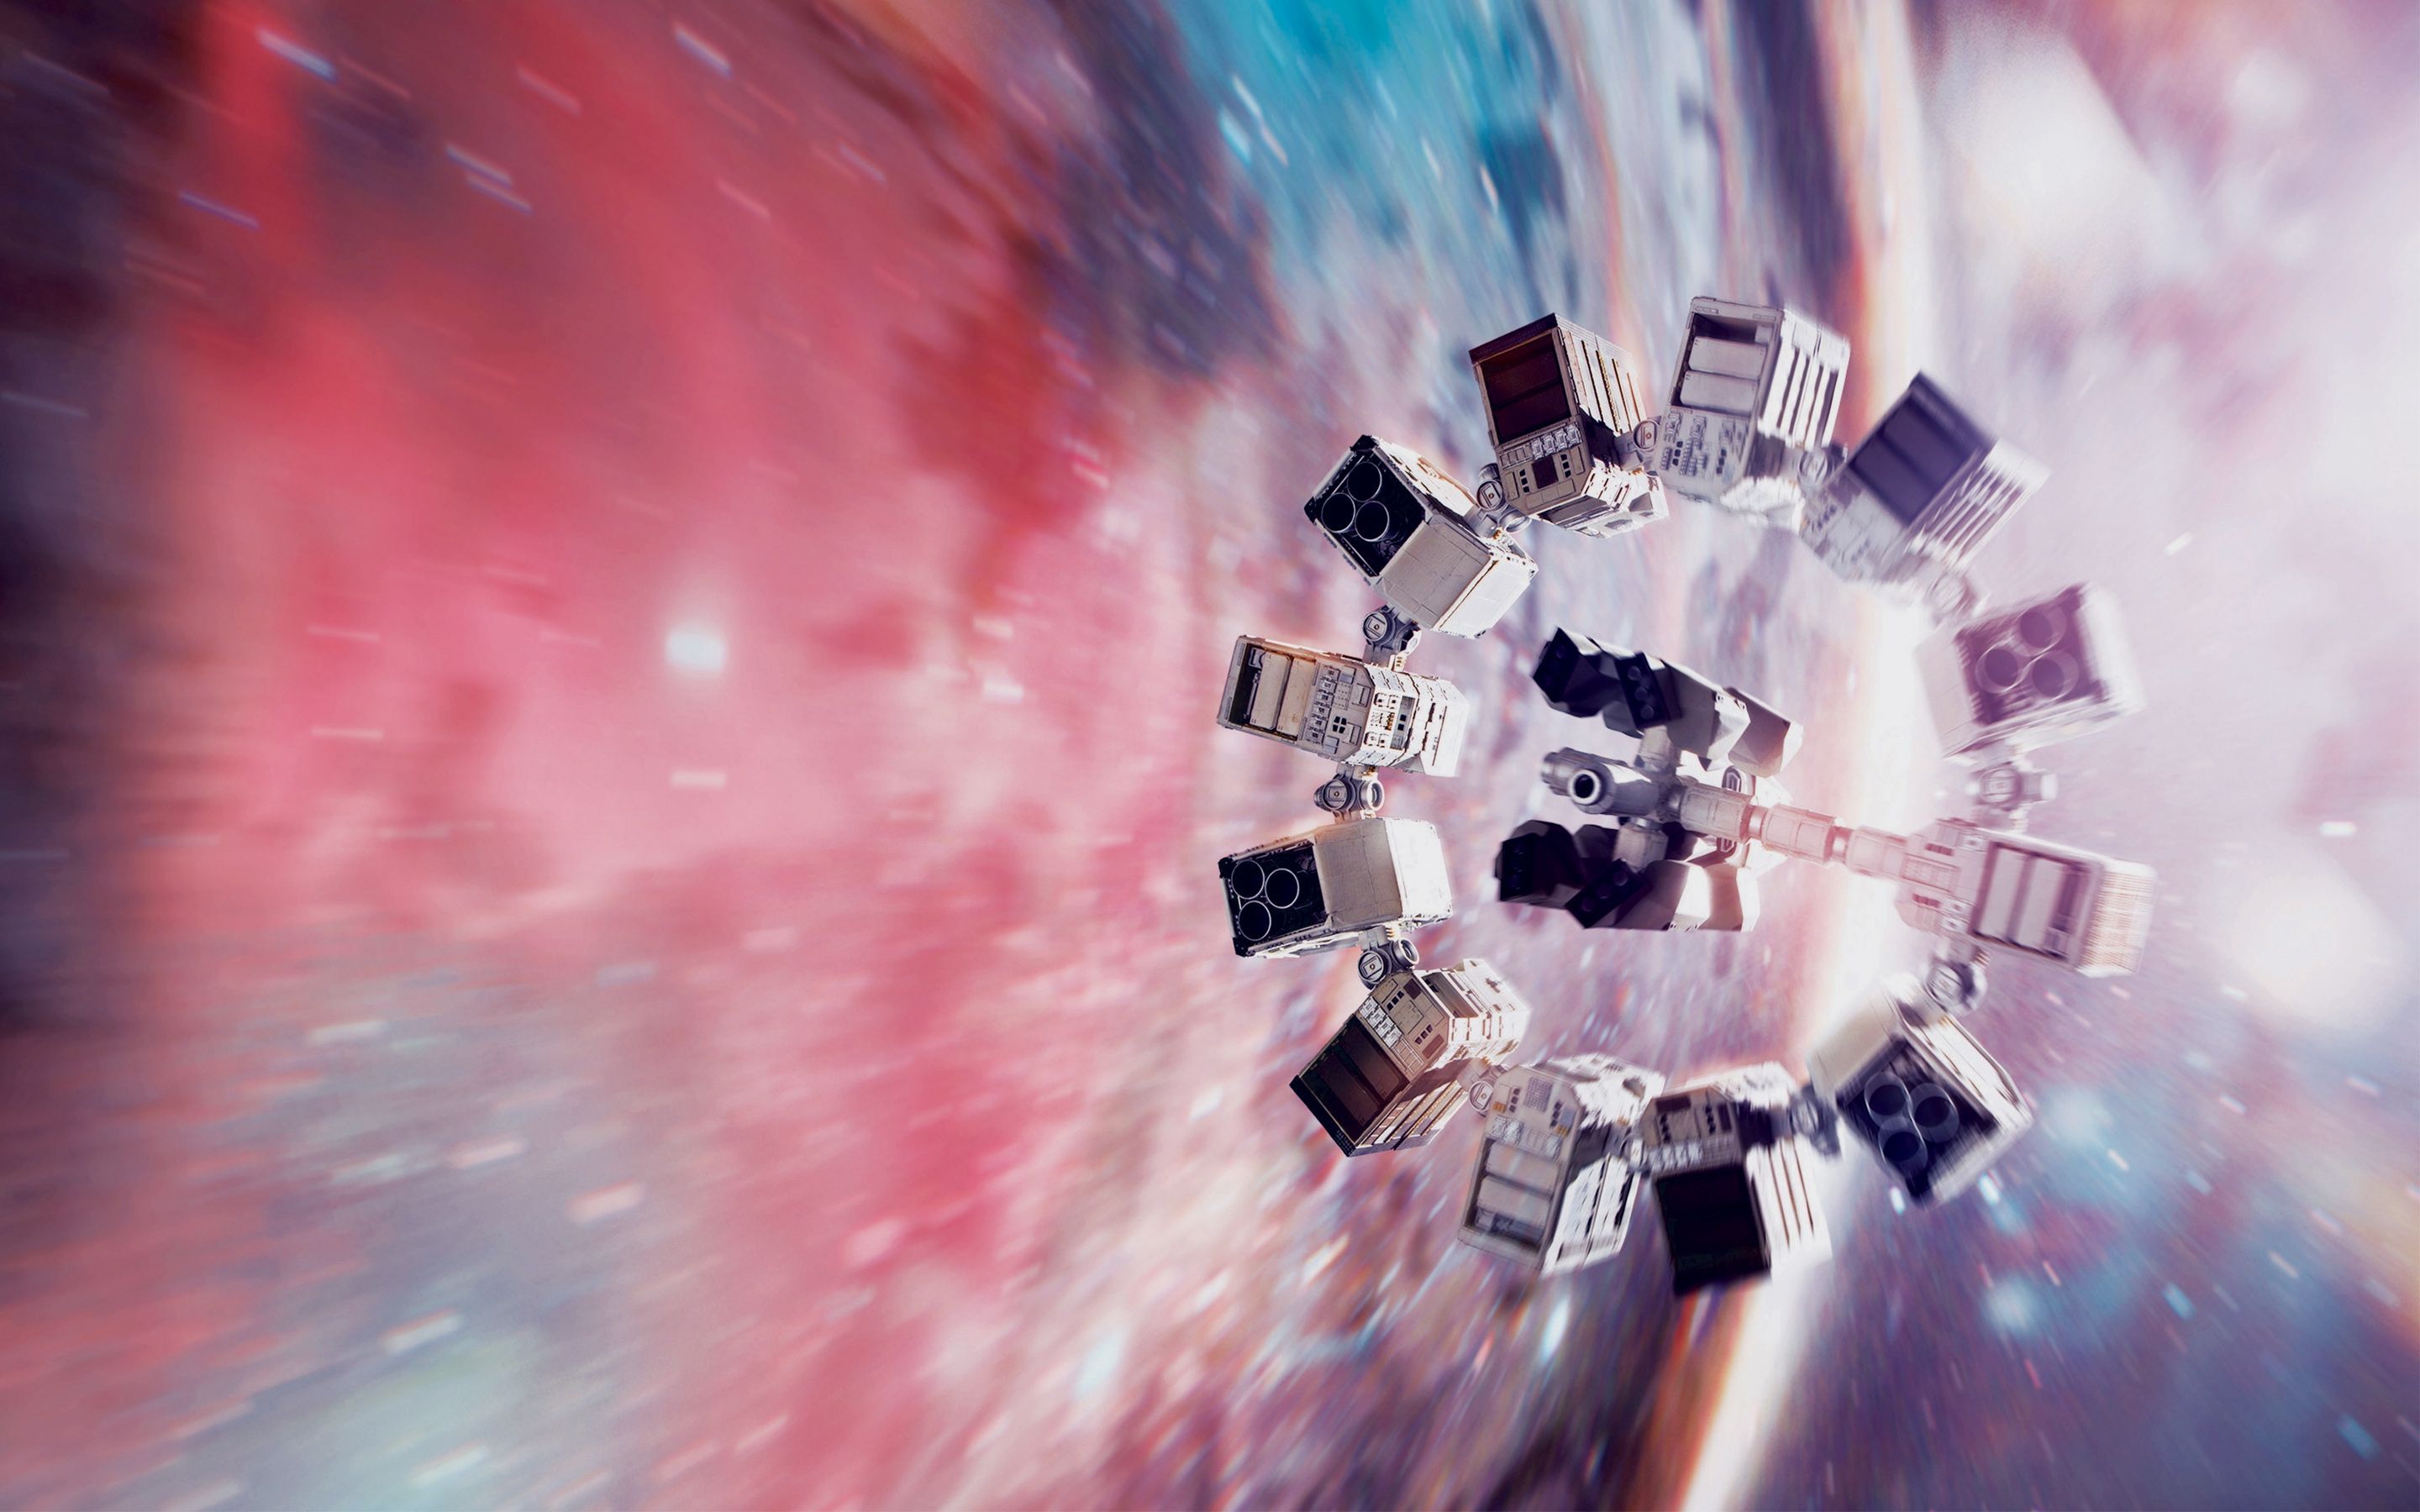 Interstellar Endurance Spaceship Wallpaper. HD Wallpaper